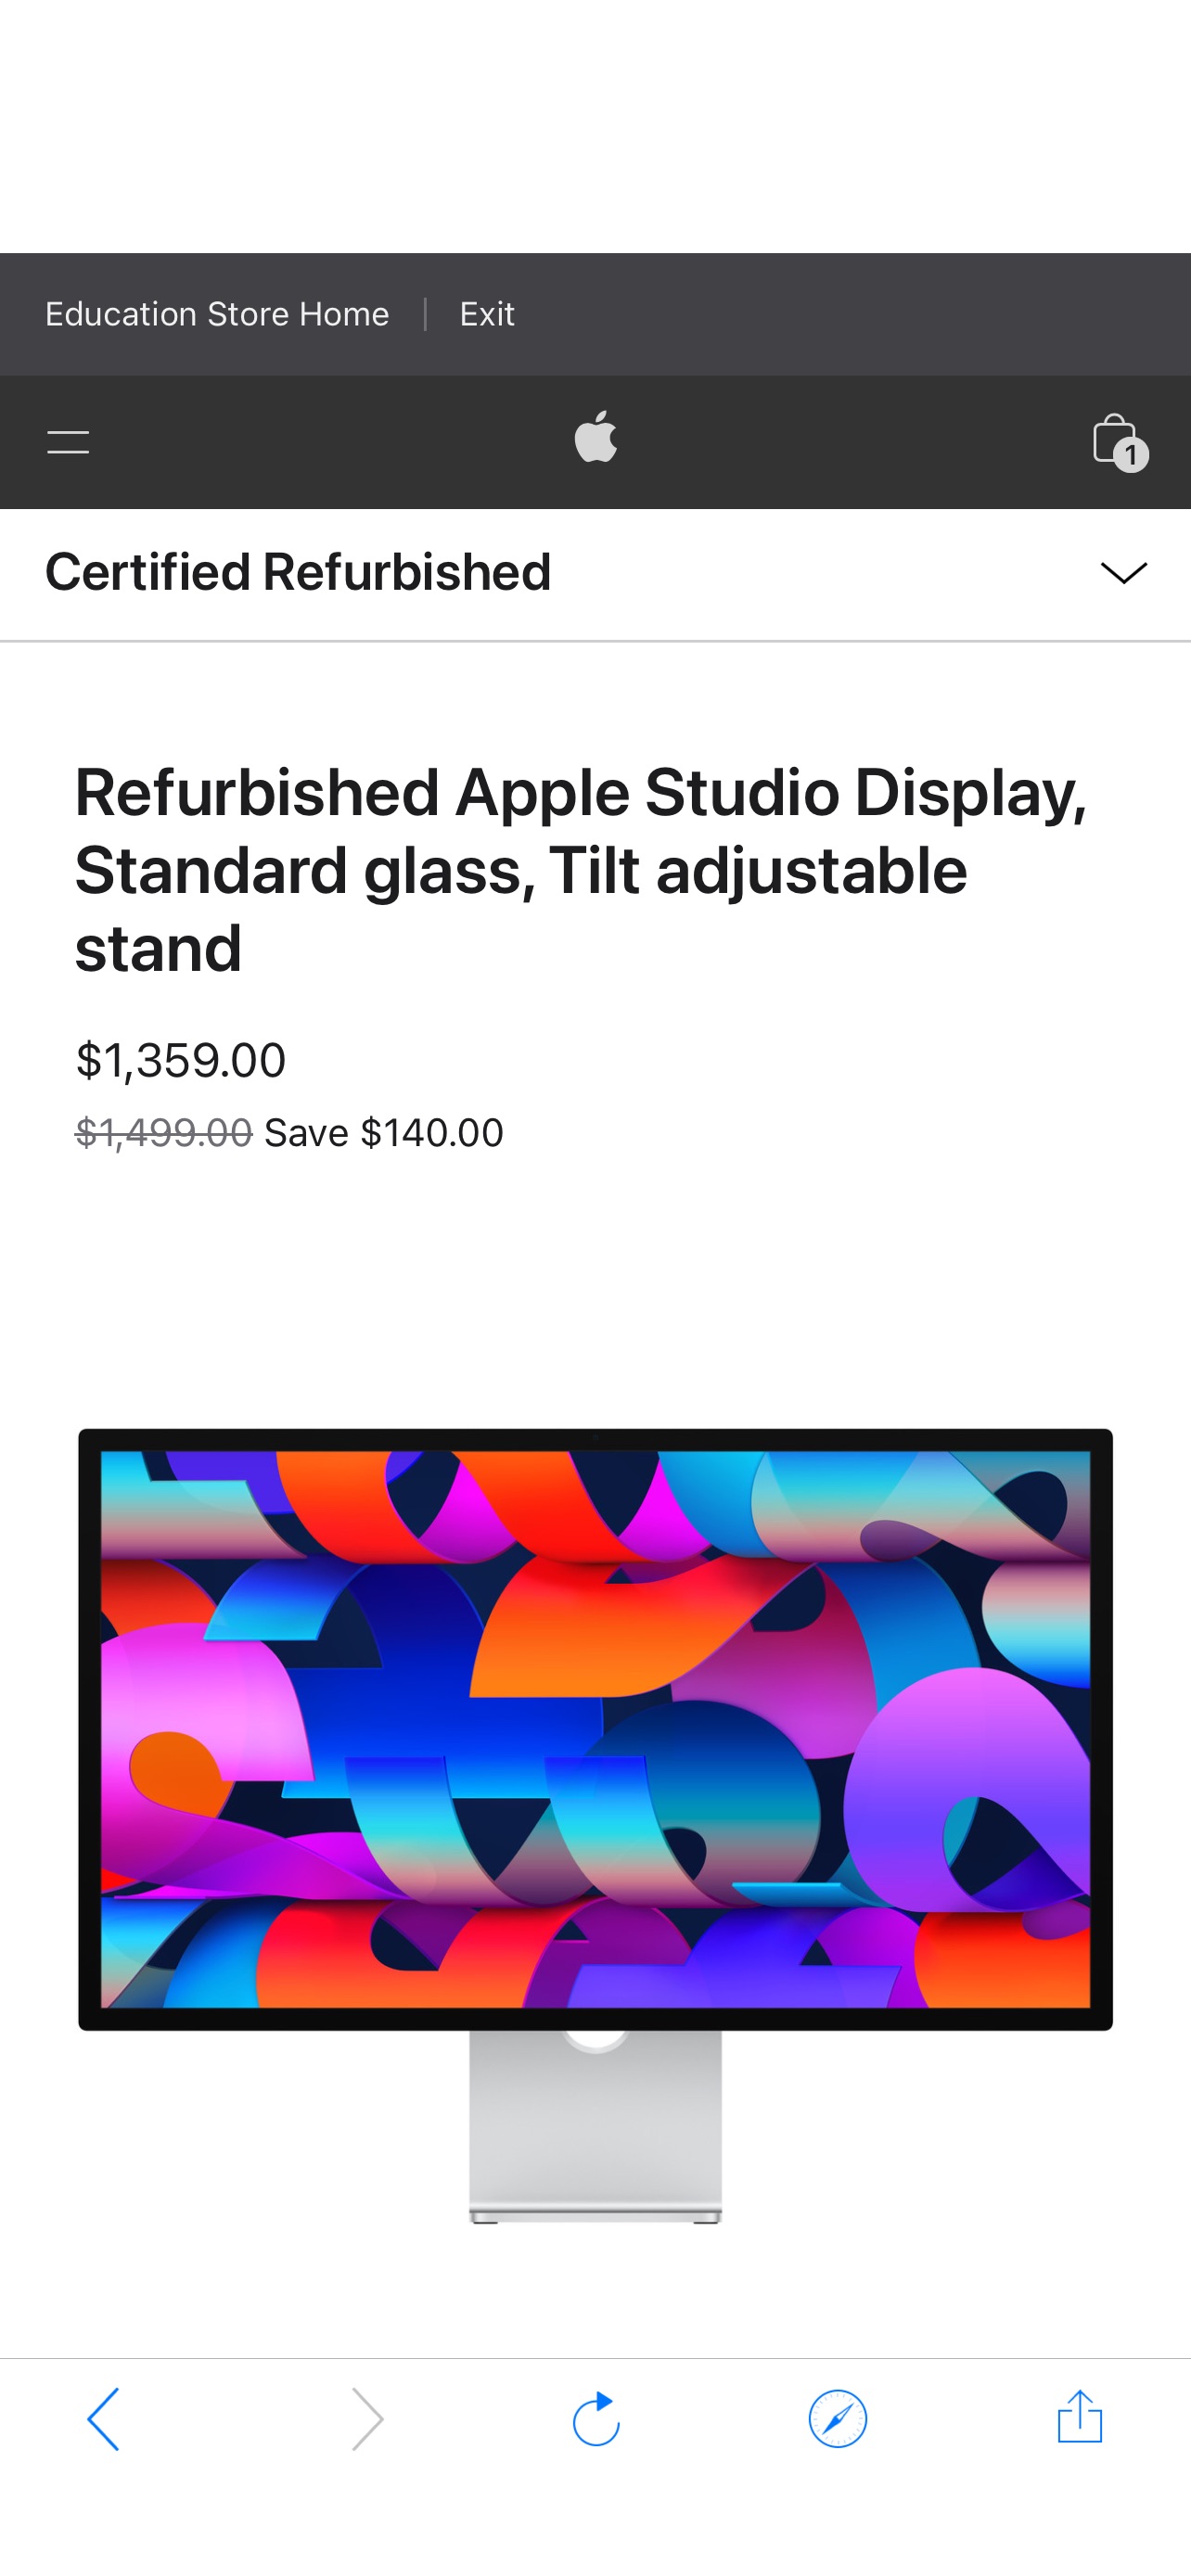 Refurbished Apple Studio Display, Standard glass, Tilt adjustable stand - Education - Apple